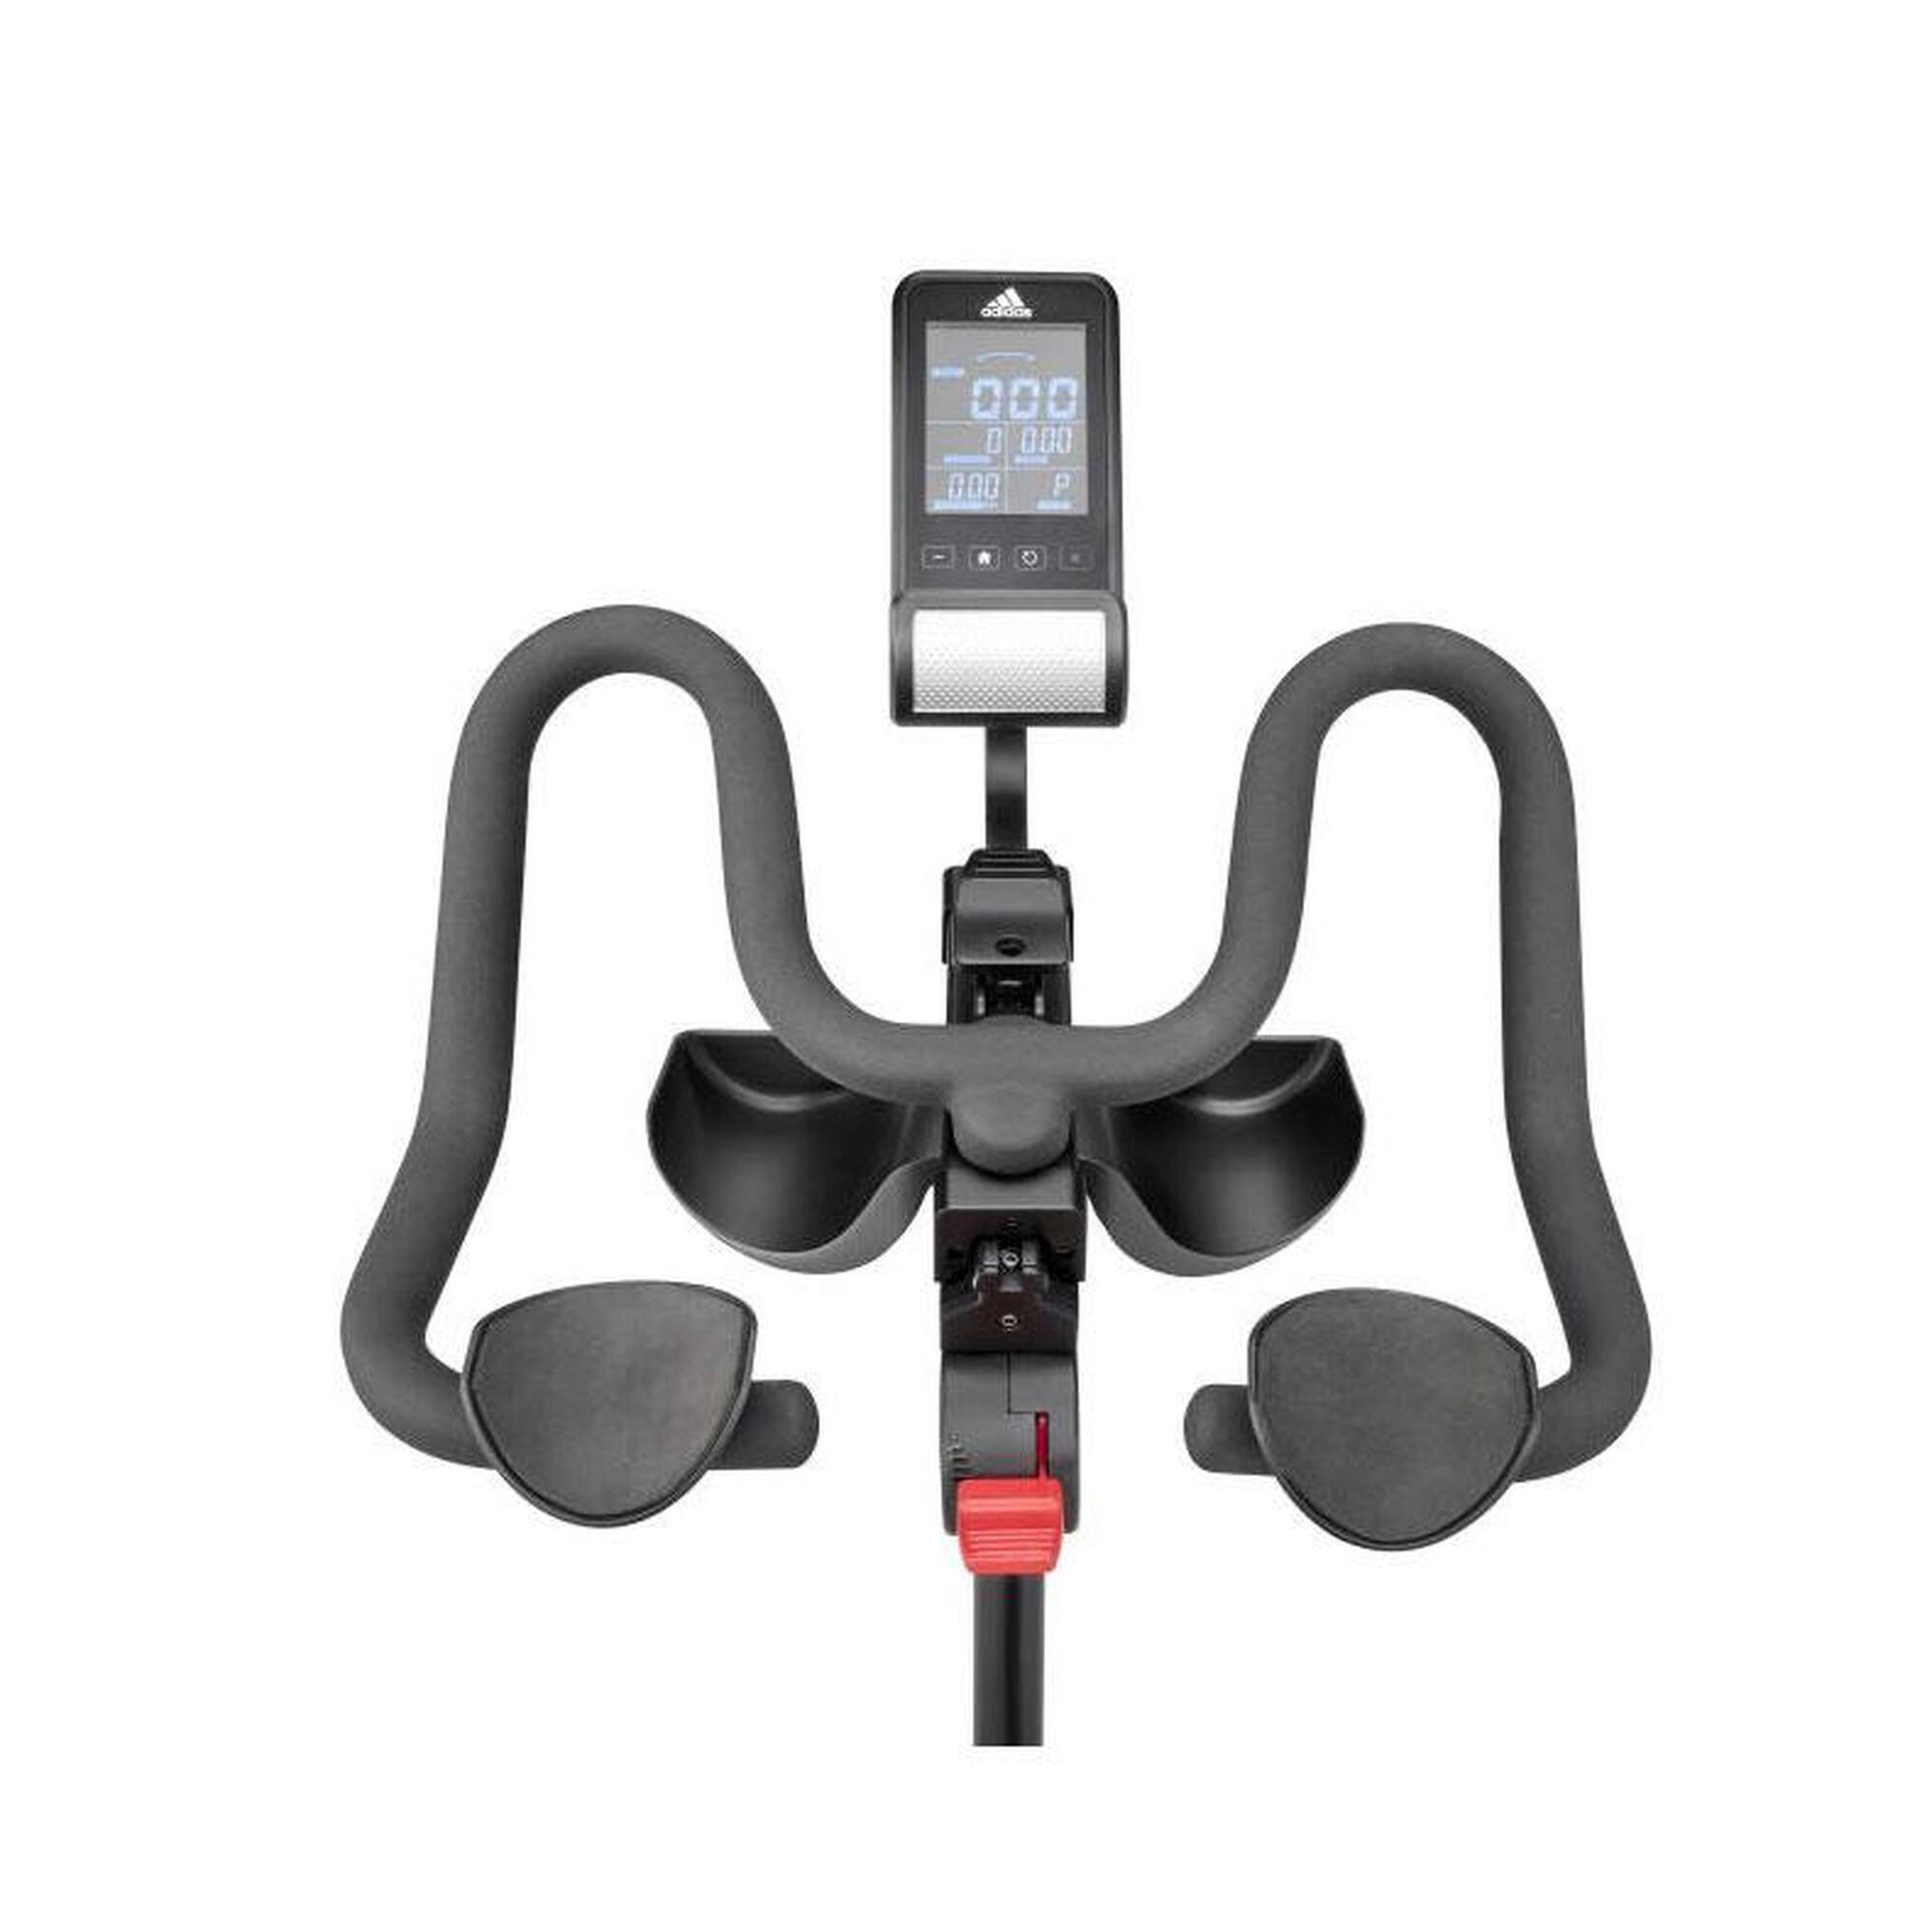 Bicicletta Indoor Cycling Adidas One C-21x (Bluetooth)